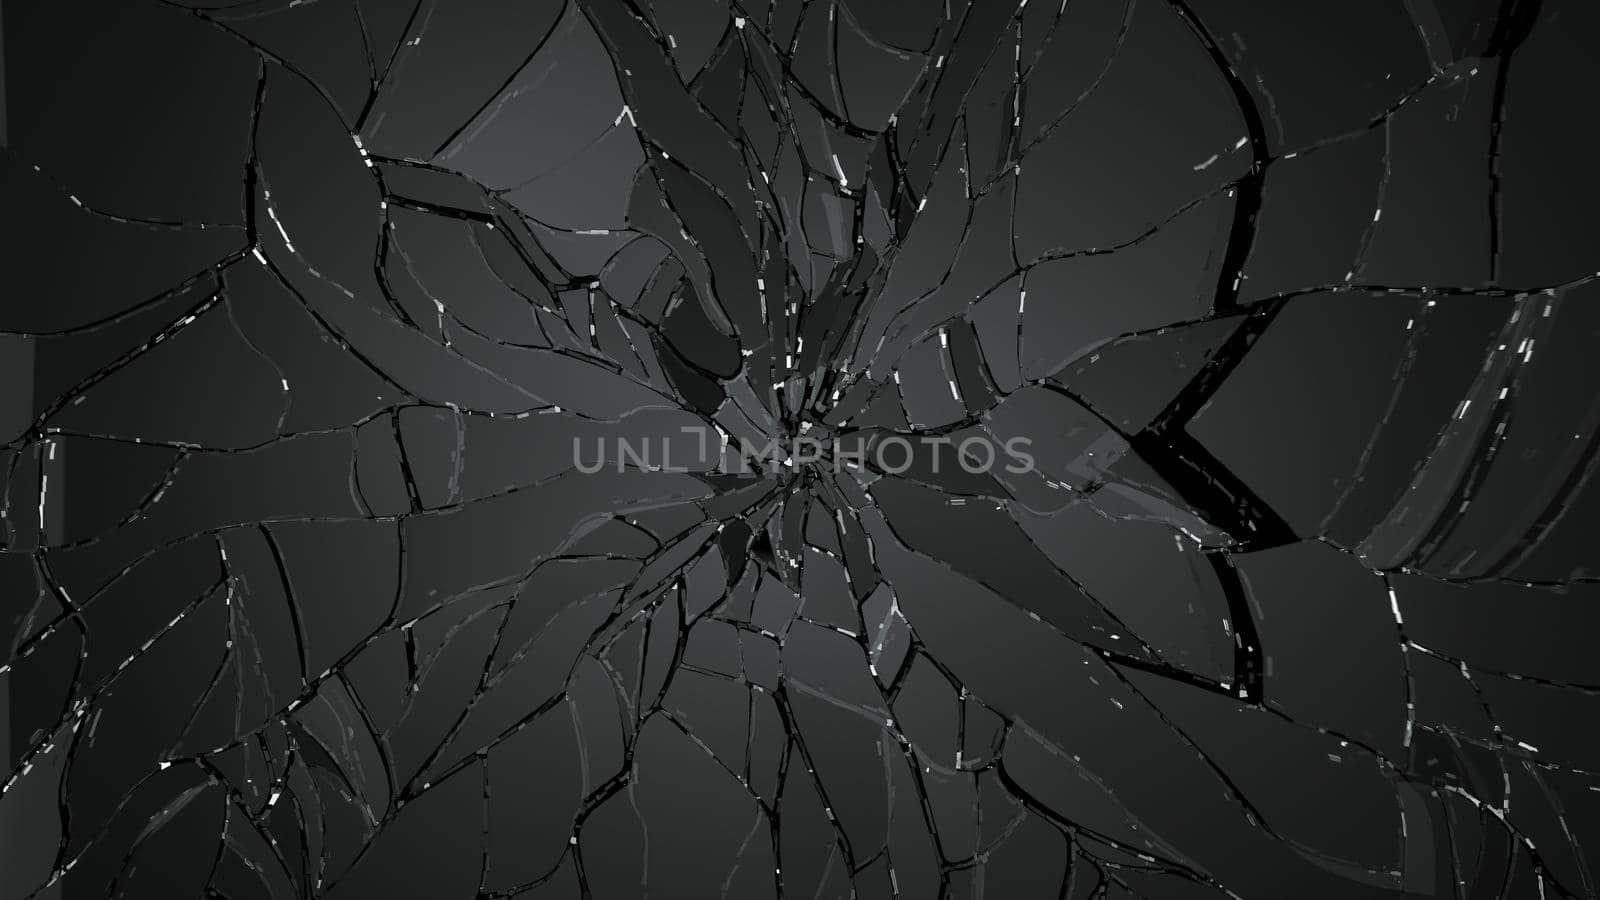 Shattered glass sharp Pieces on black. high resolution 3d illustration, 3d rendering